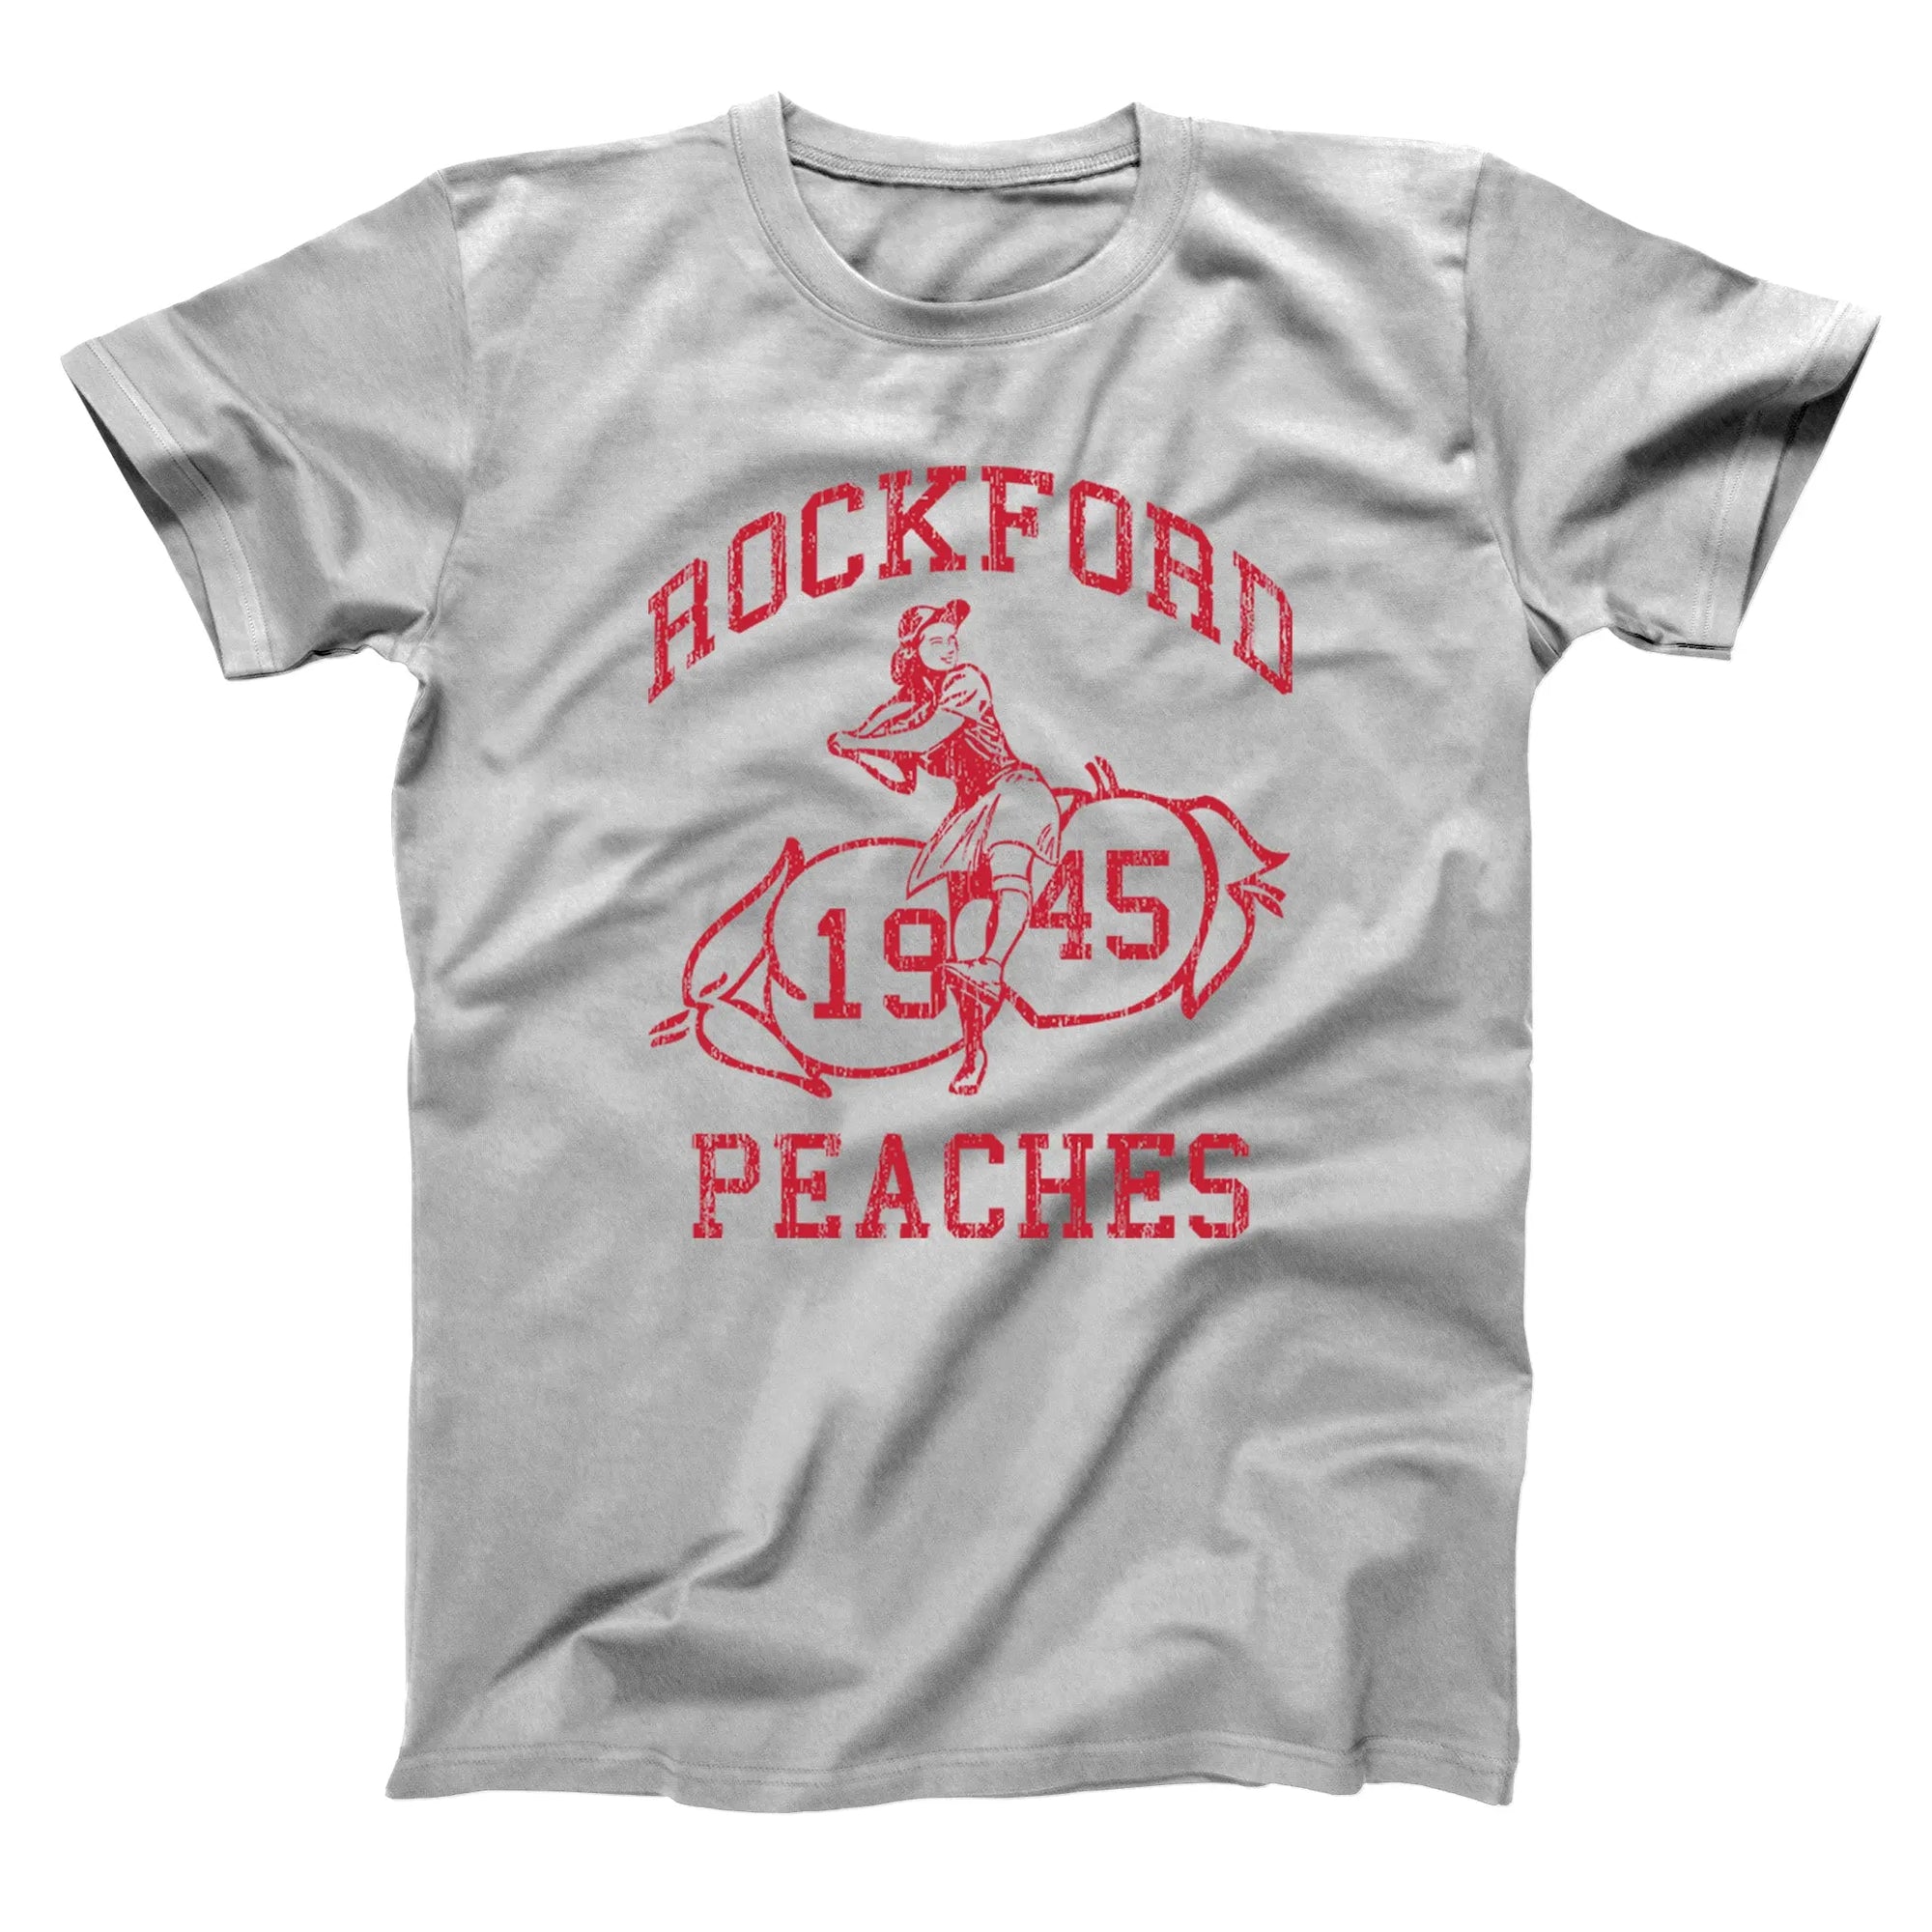 Rockford Peaches Tshirt - Donkey Tees